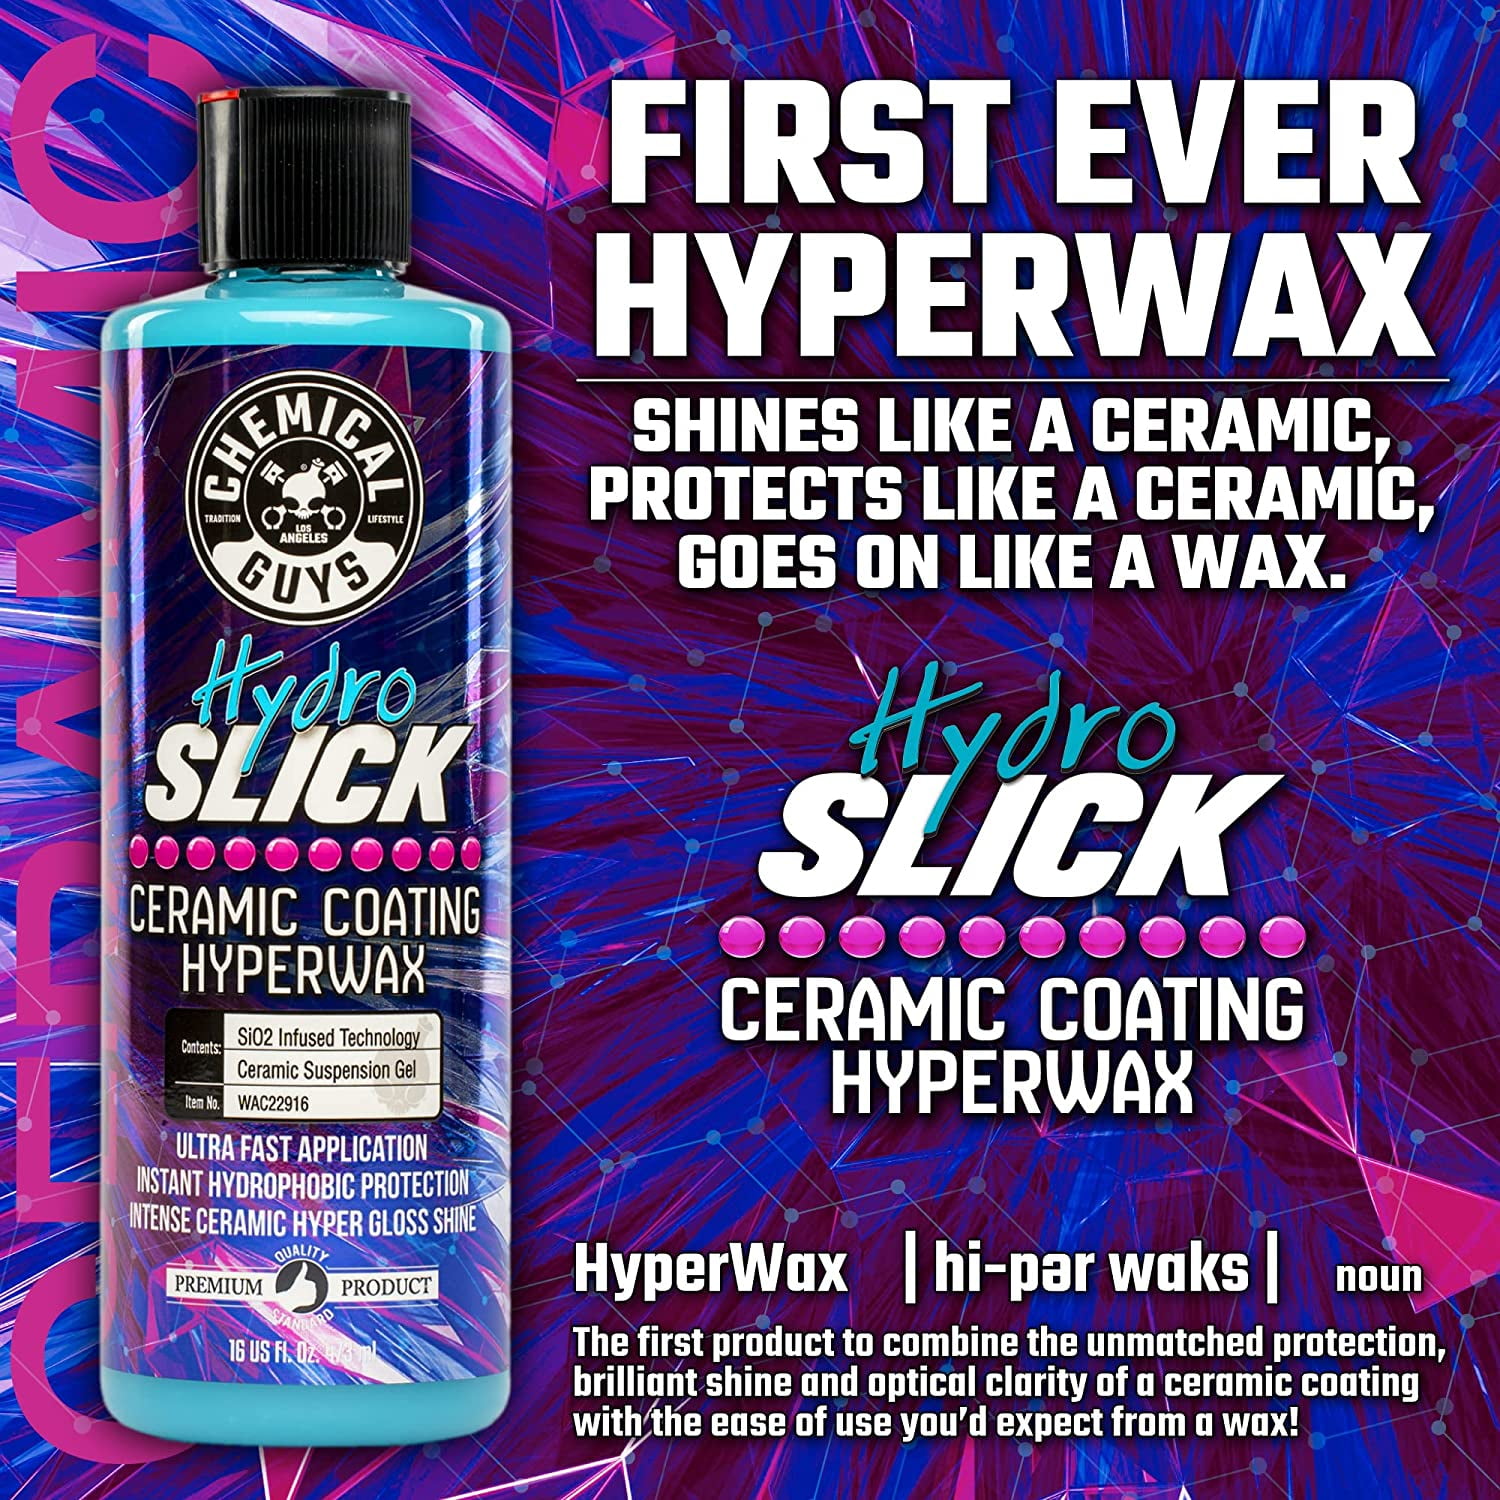 Chemical Guys HydroSlick Ceramic Coating Hyper Wax 16 oz Bottle WAC22916